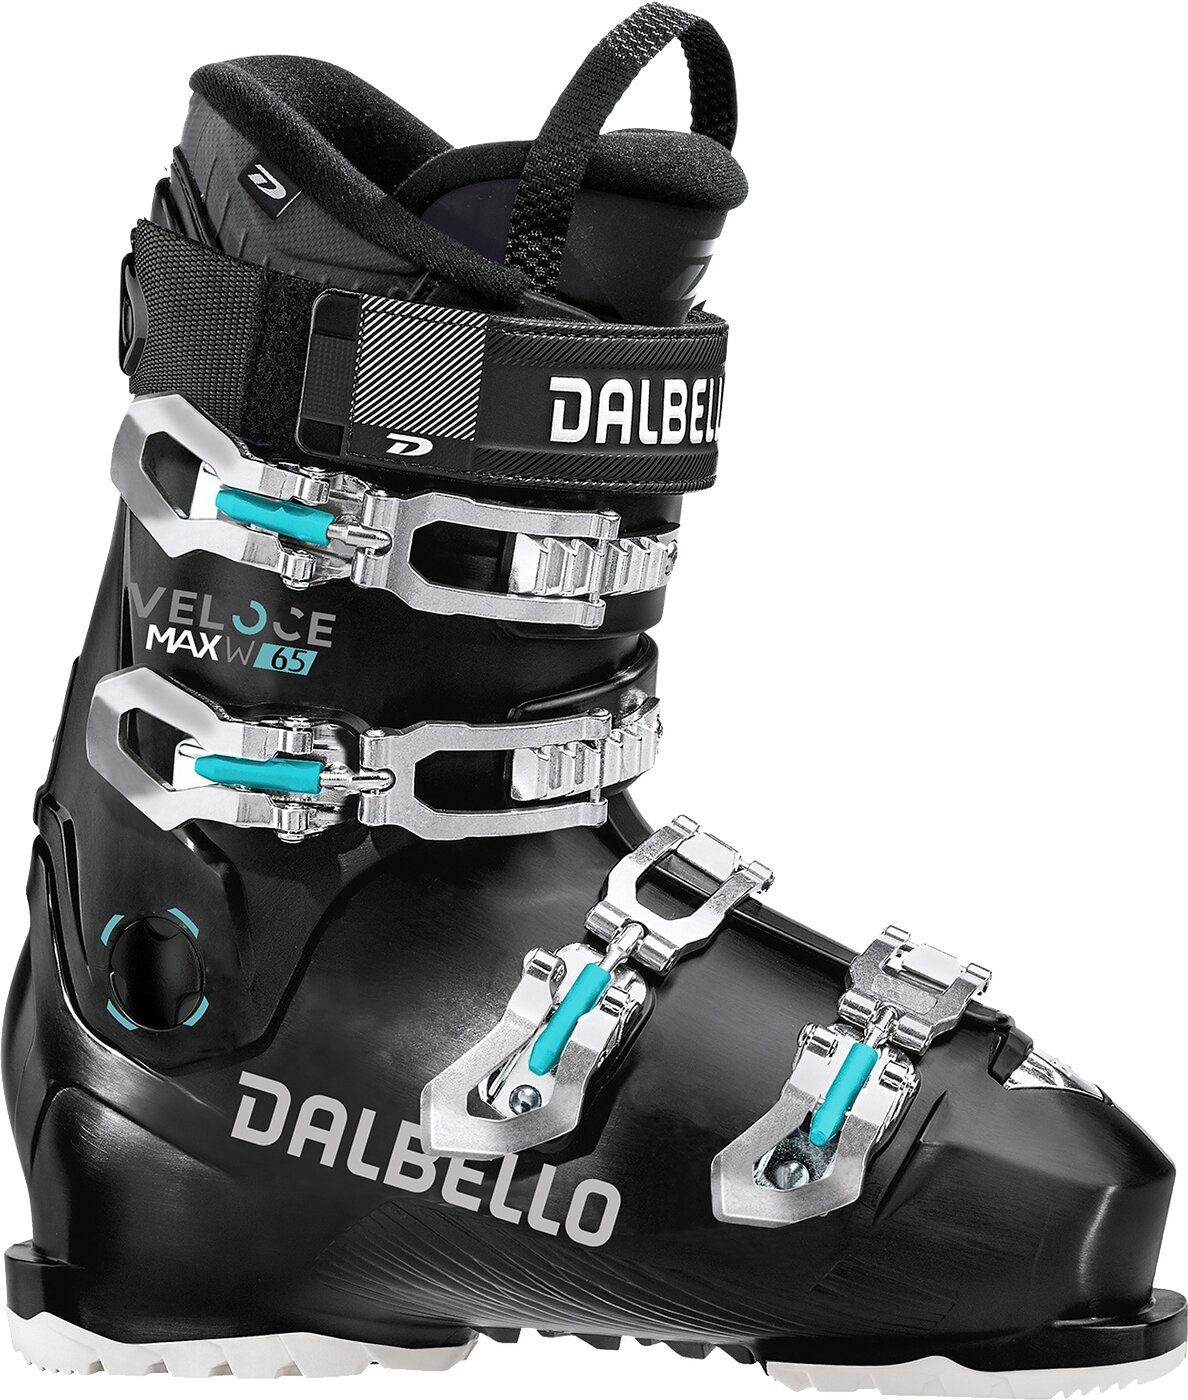 DALBELLO VELOCE MAX 65 W LS BLACK/BLACK Skischuh